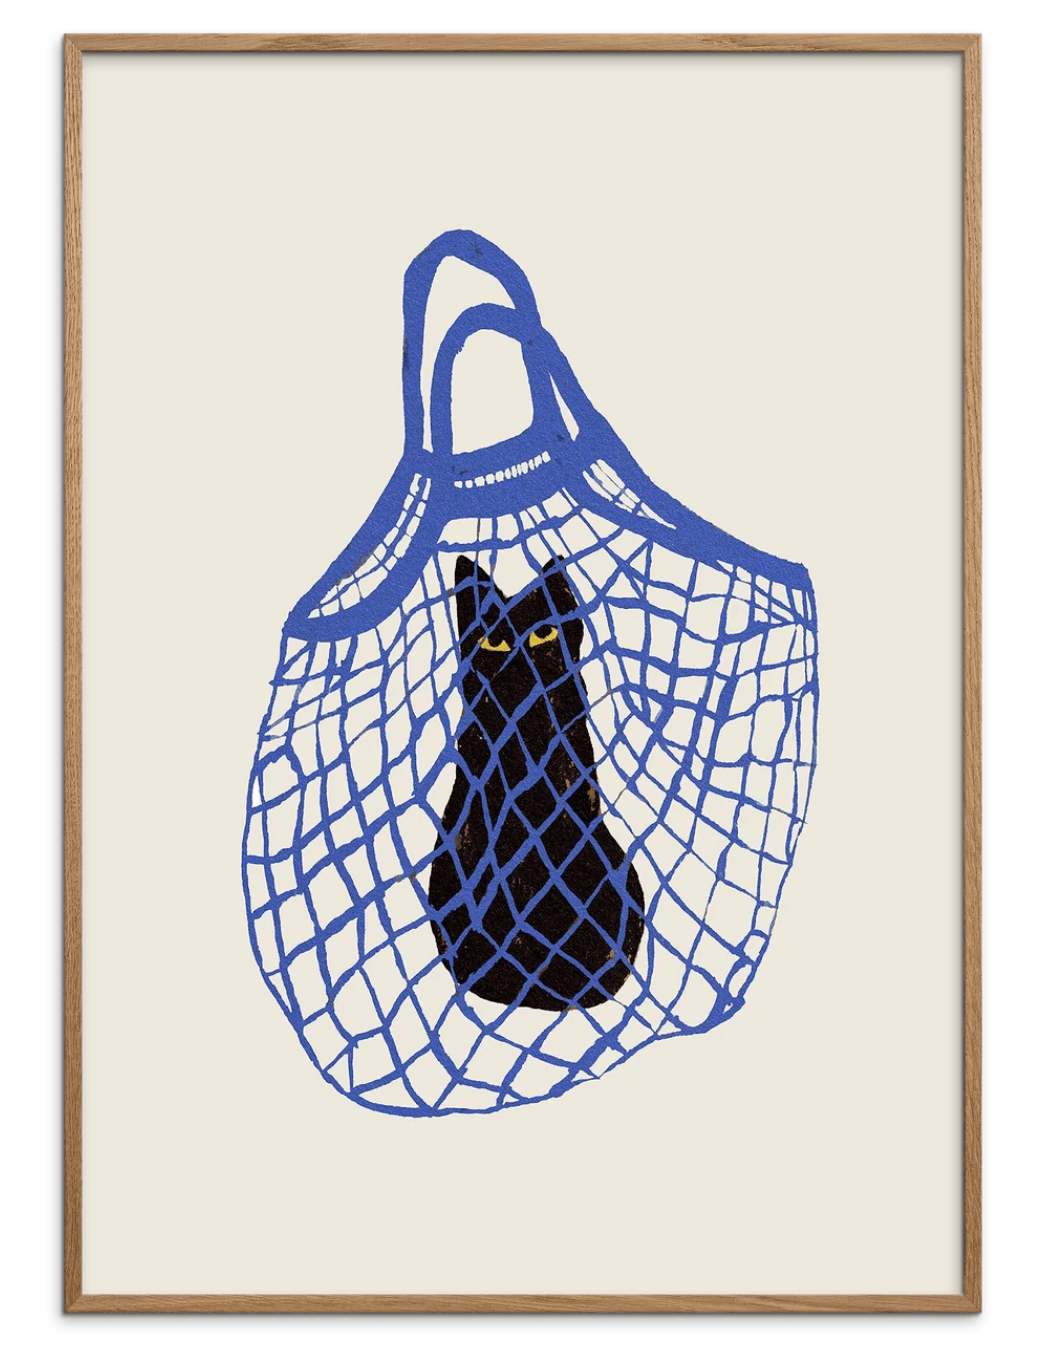 P&F Kunstdruck The Cats in The Bag Chloe Purpero Johnson 30x40 cm - noord®